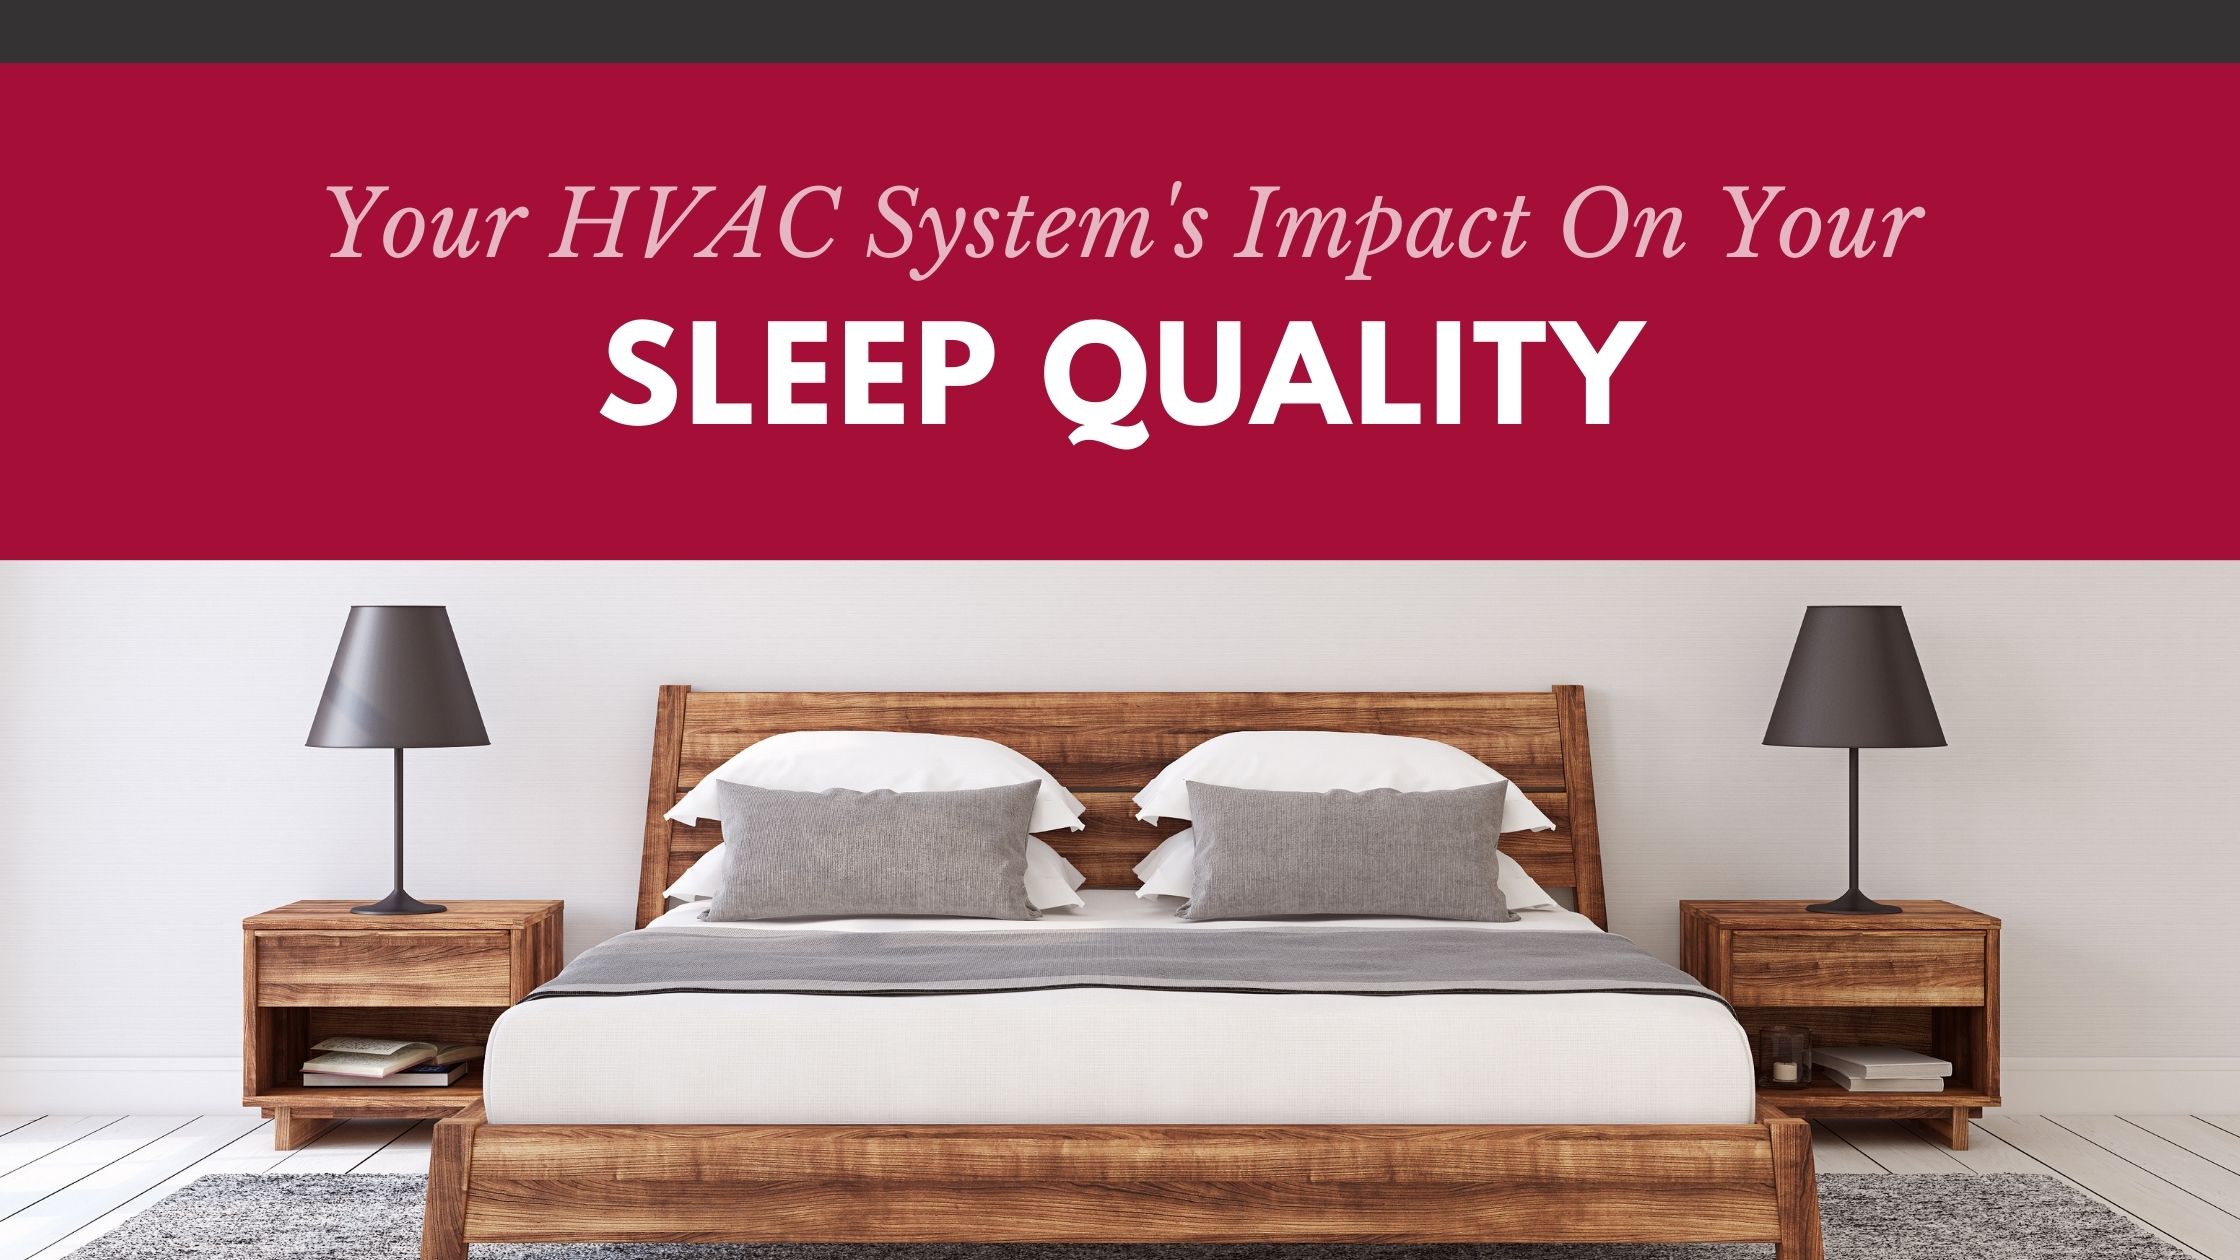 HVAC system's impact on your sleep quality